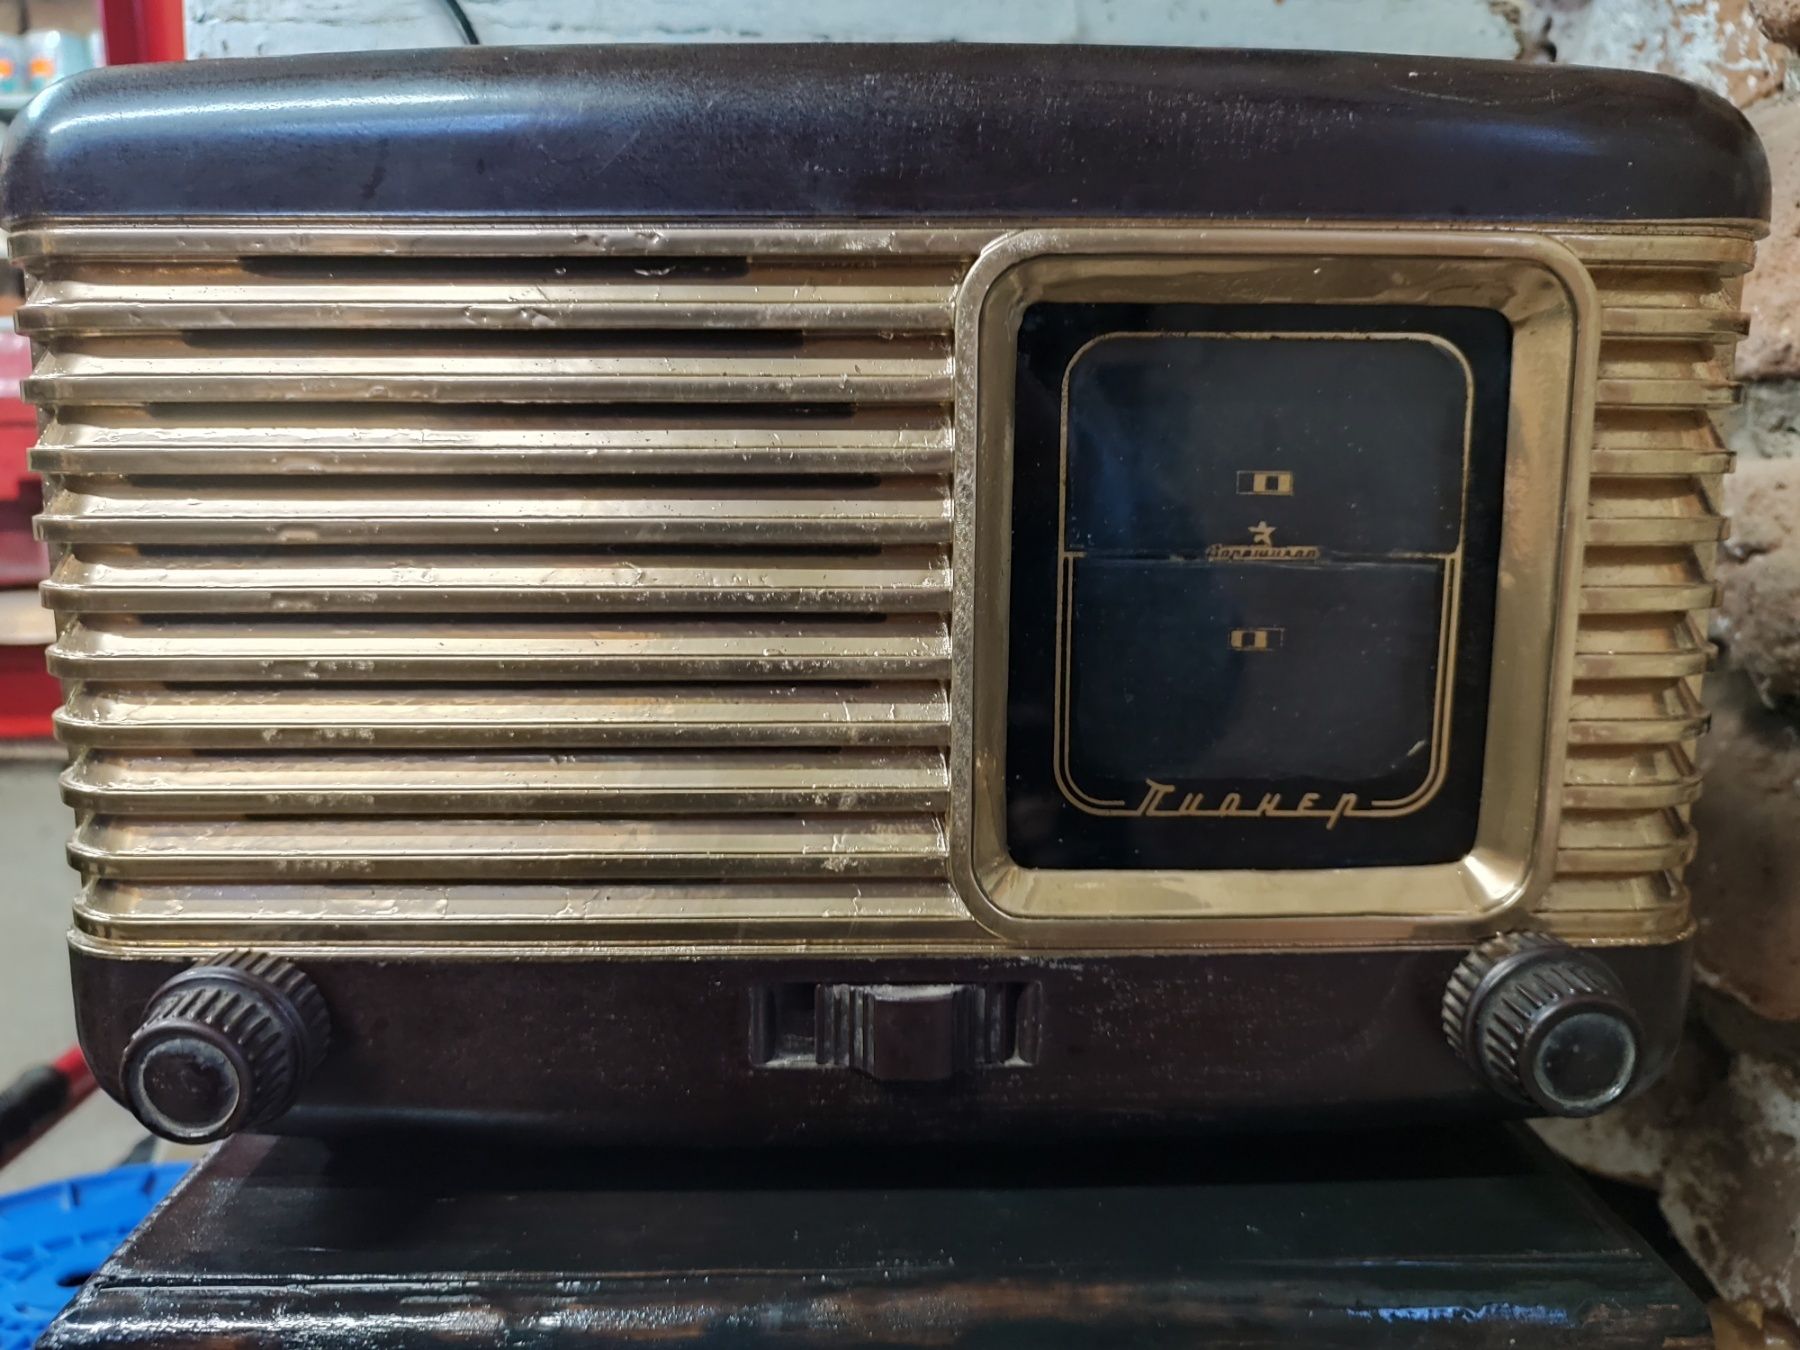 Радио Пионер 1958